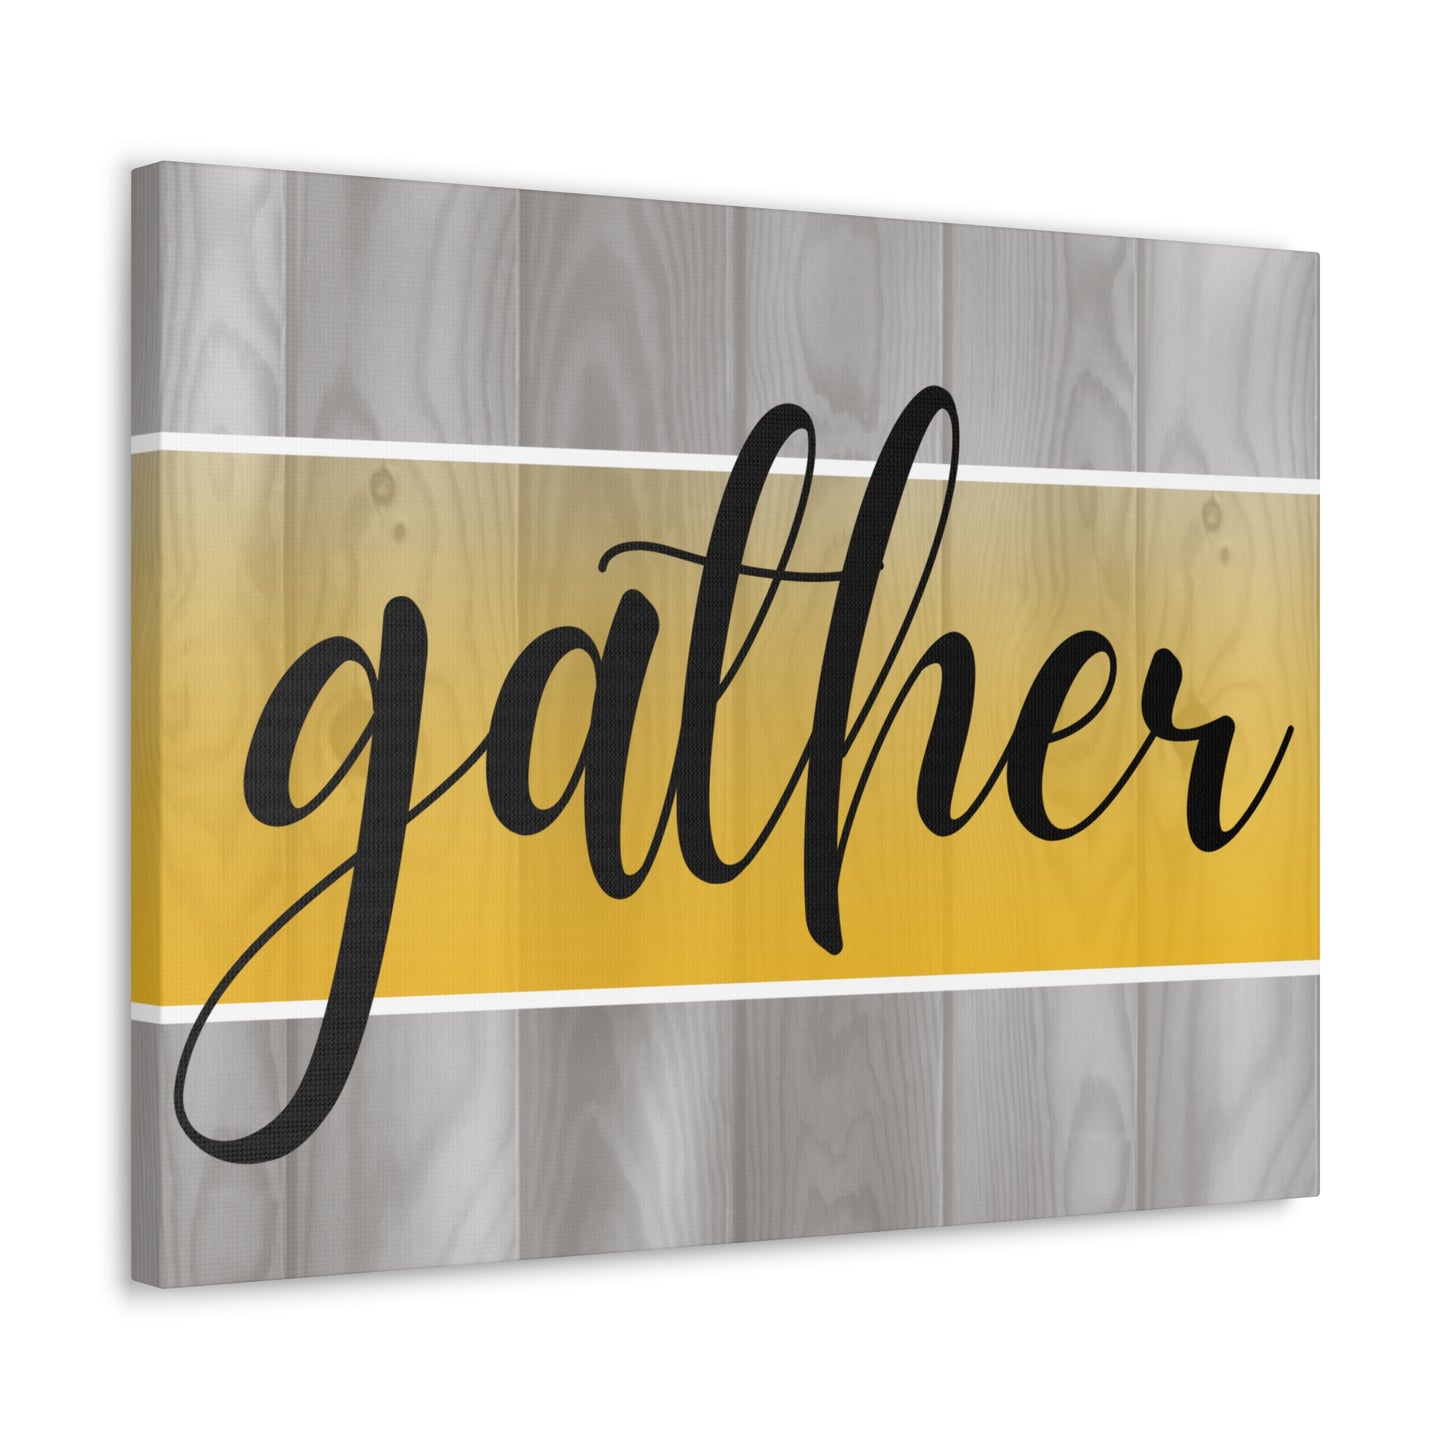 Christian Wall Art: Gather (Wood Frame Ready to Hang)